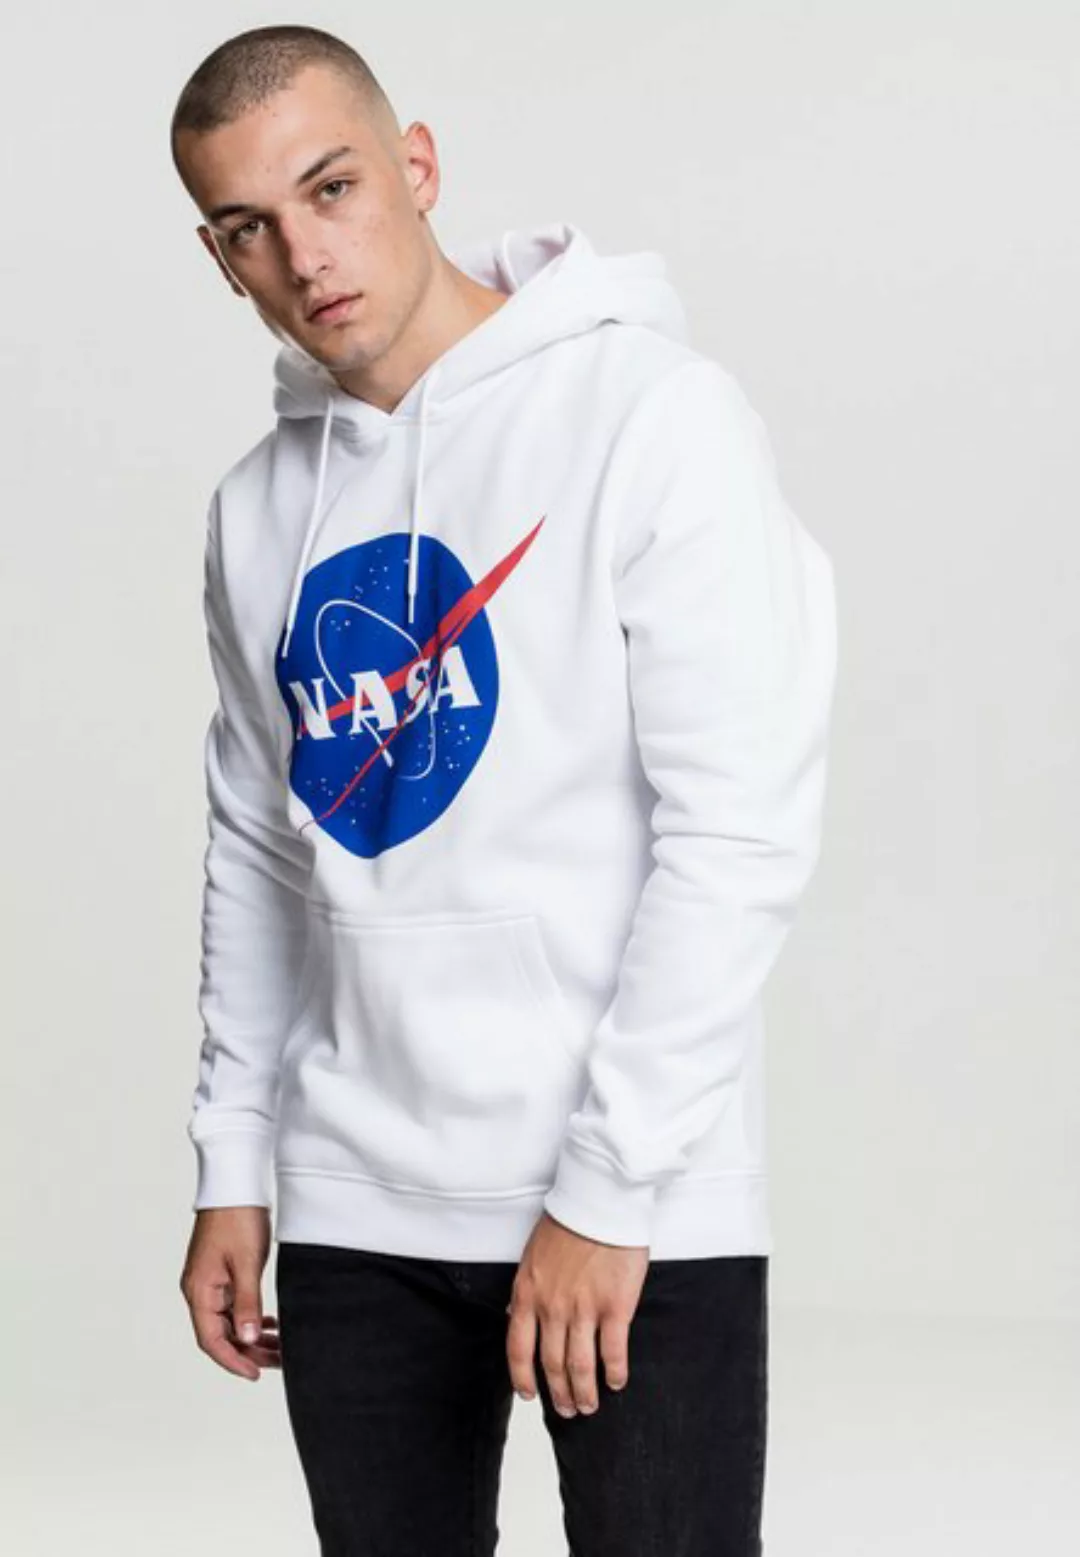 Mister Tee Kapuzenpullover MT519 - NASA Hoody white L günstig online kaufen